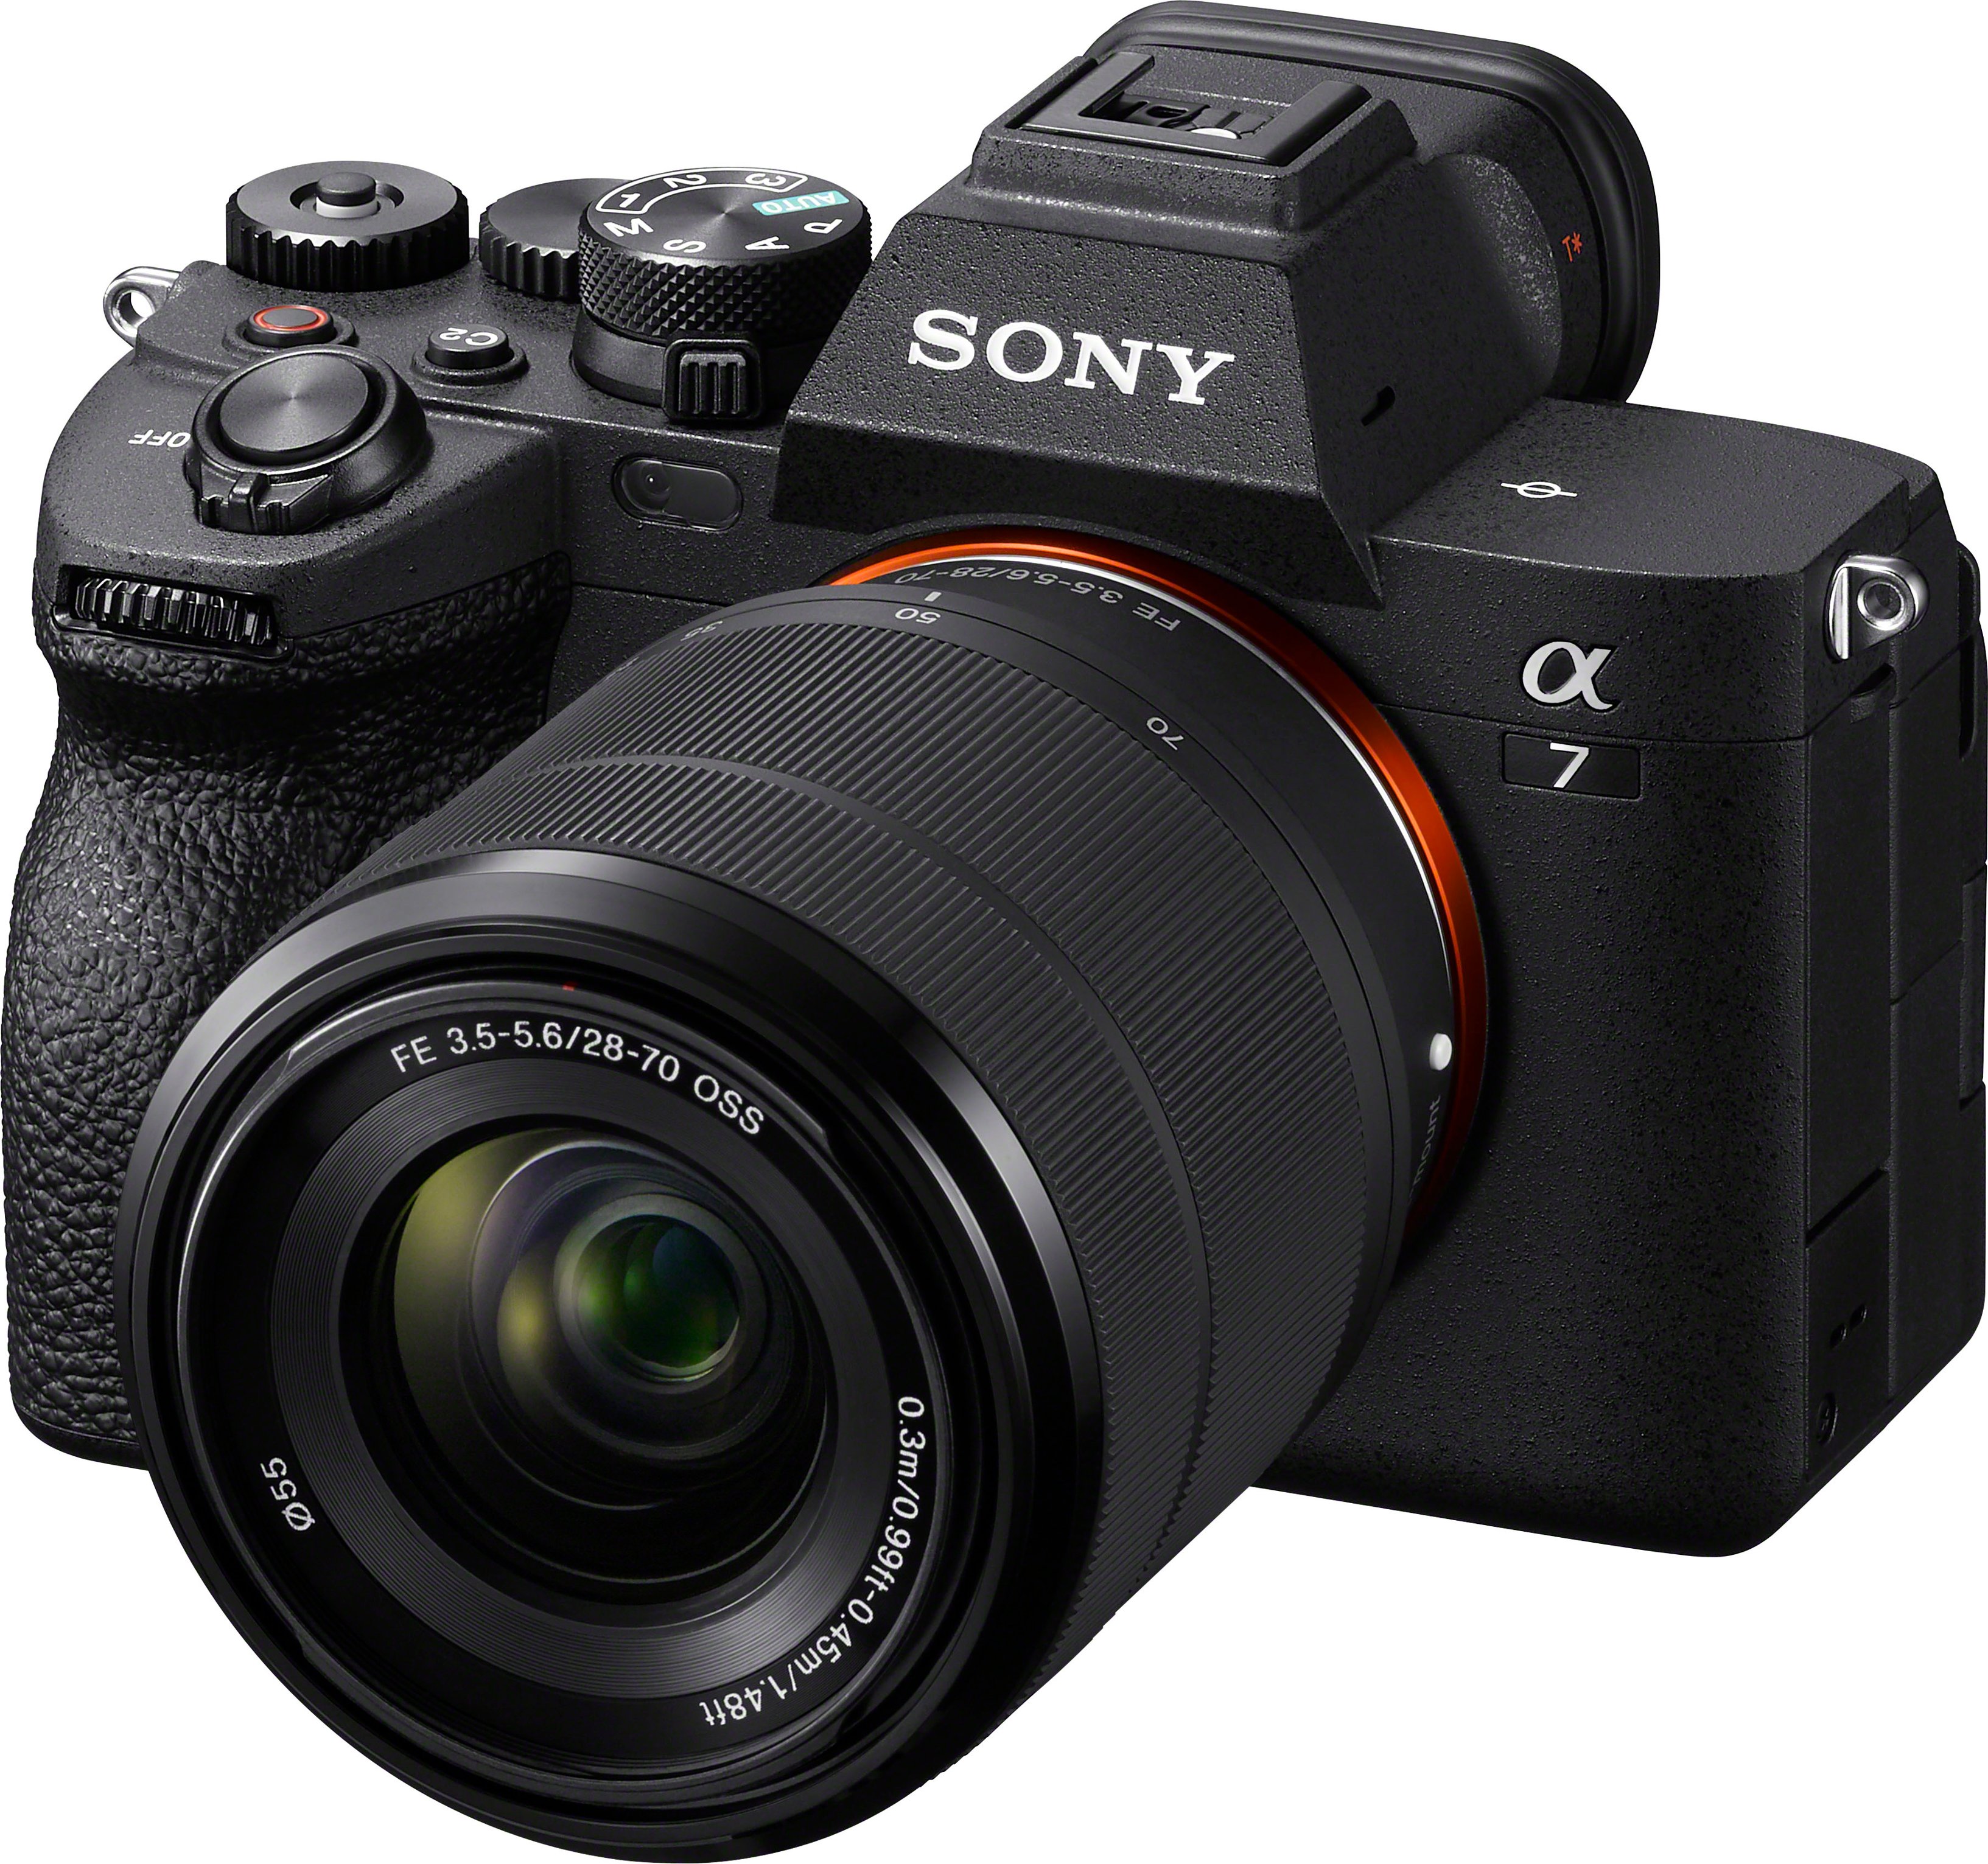 Sony Alpha 7 IV: Beyond 'basic' cameras - GadgetMatch